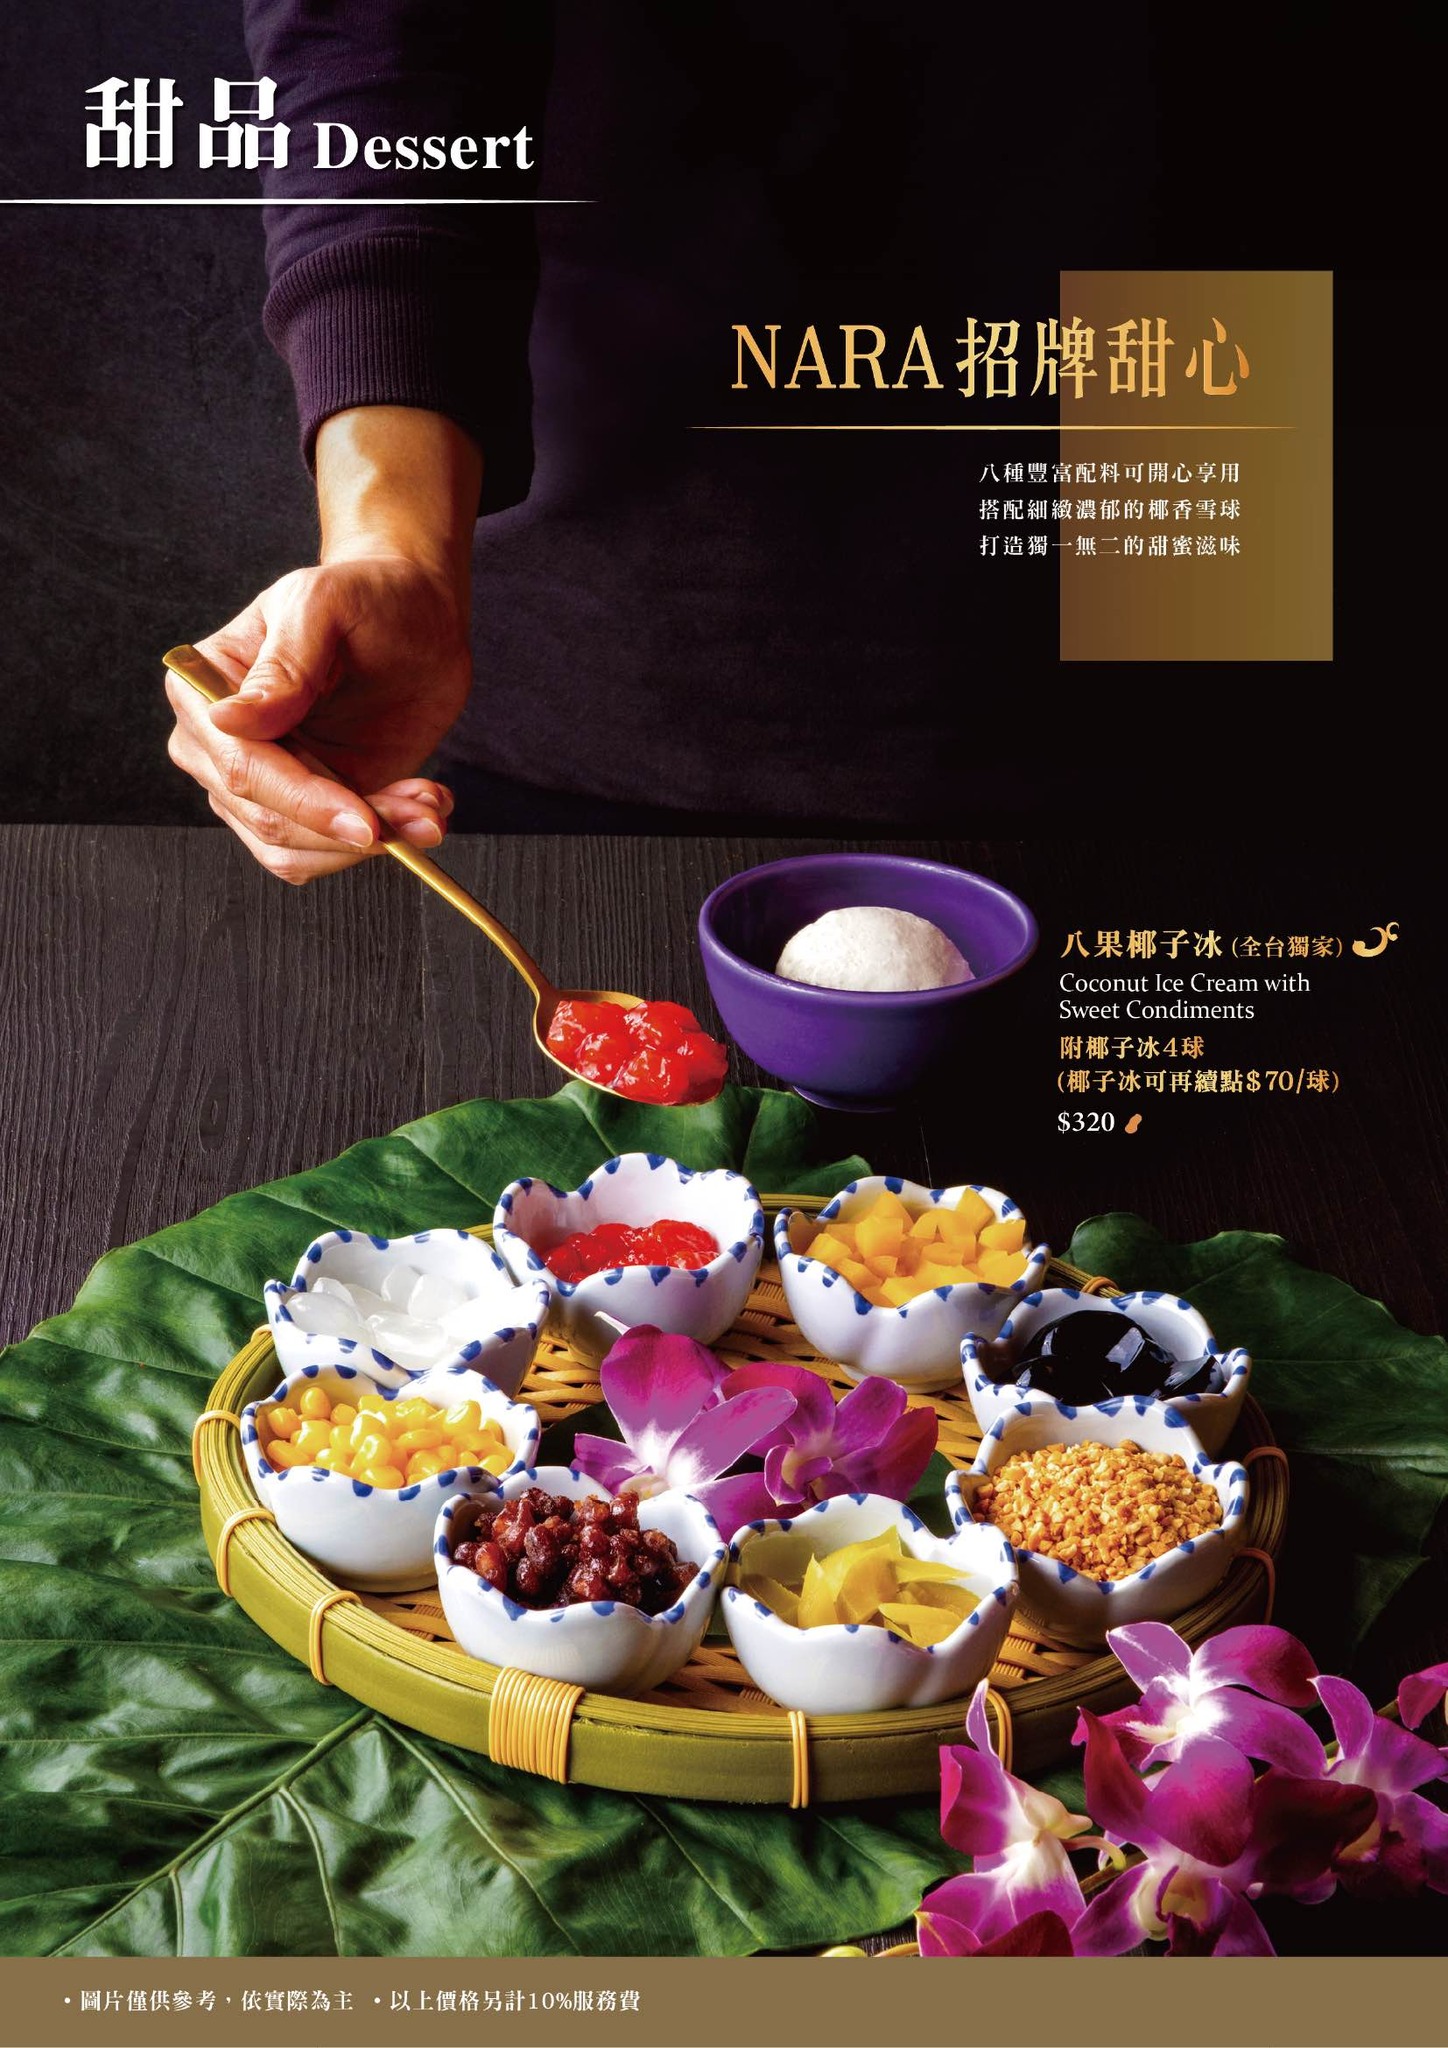 Nara Thai Cuisine店家資訊,Nara Thai Cuisine菜單,Nara Thai Cuisine開放時間,Nara Thai Cuisine高雄,高雄SOGO美食,高雄泰國菜,高雄泰式料理推薦,高雄米其林,高雄美食